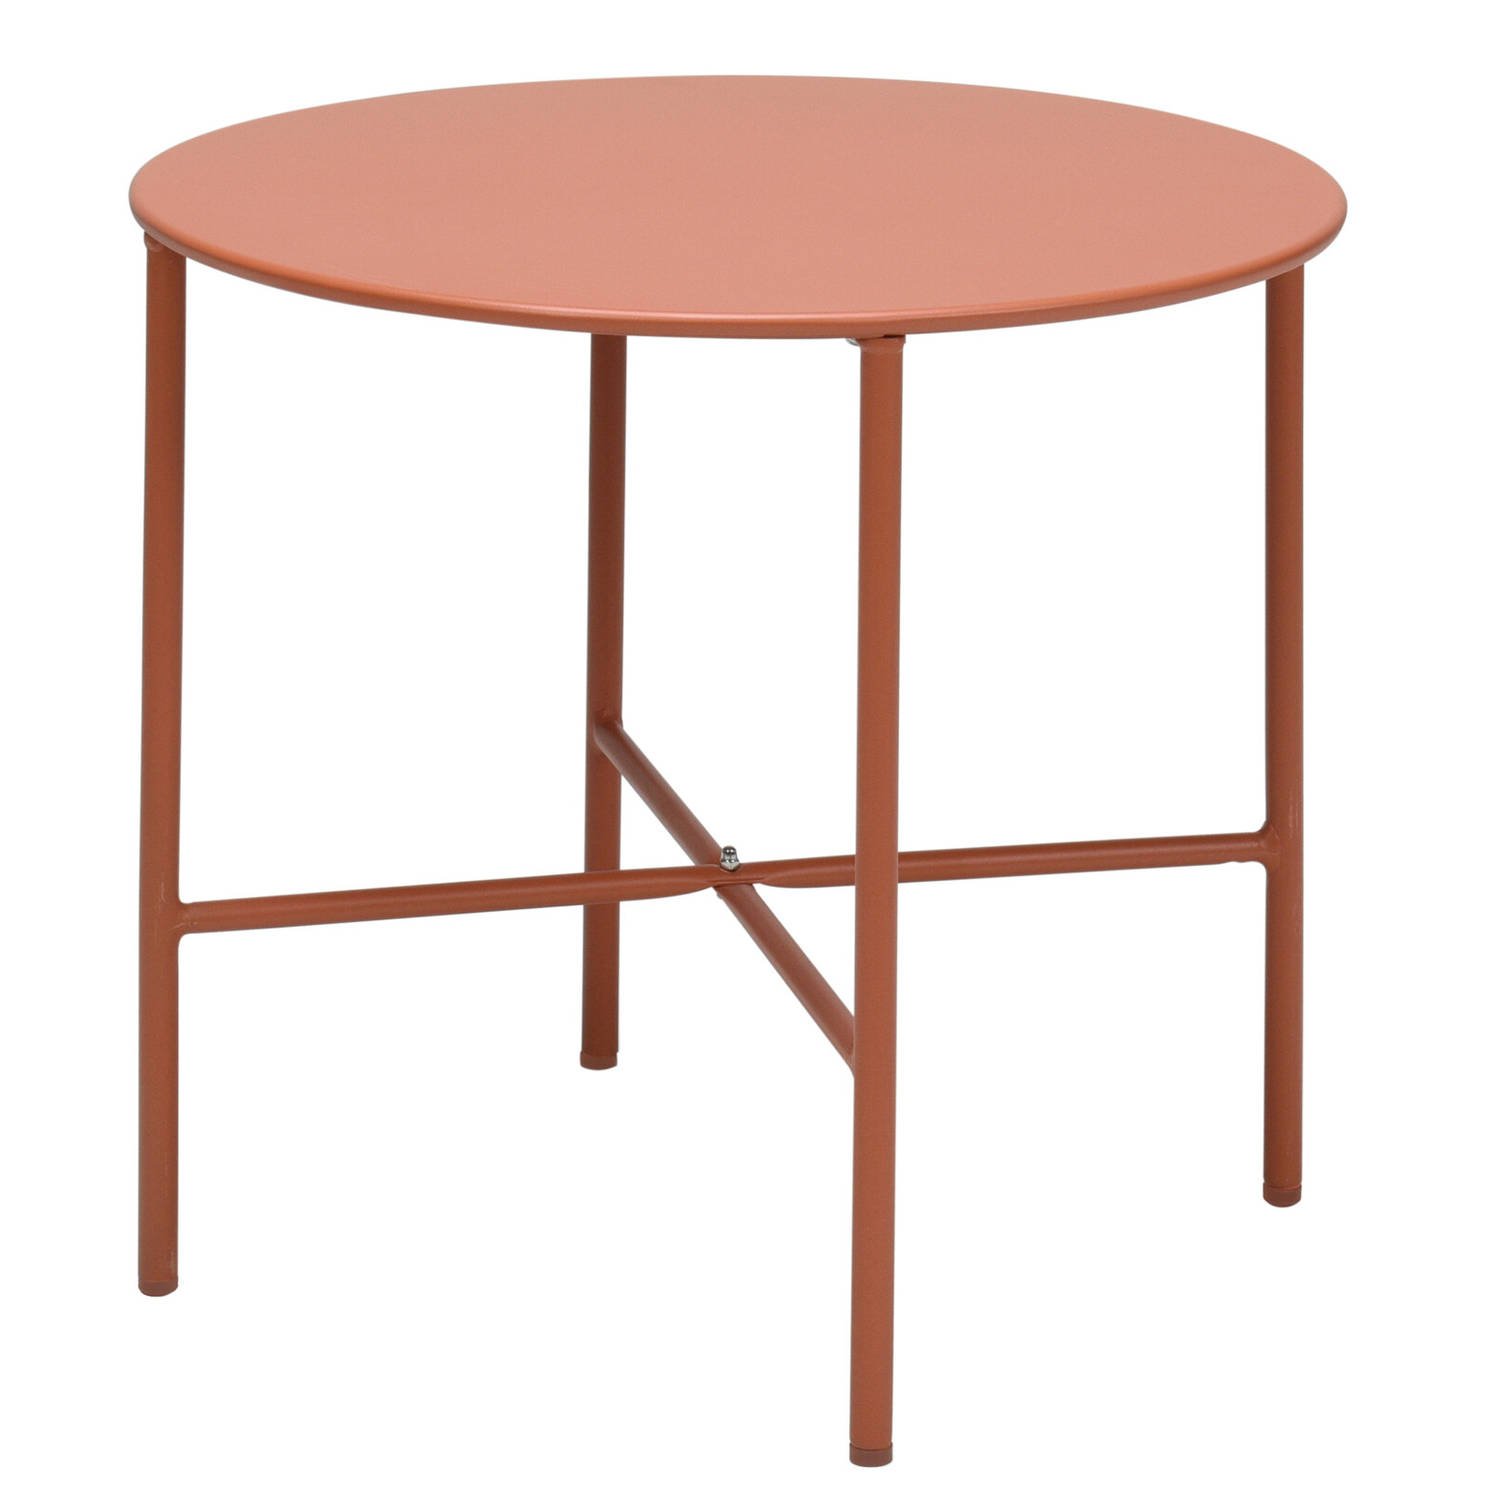 Stout galblaas zuur Relaxwonen - tuinset - roze - tafel + 2 stoelen | Blokker